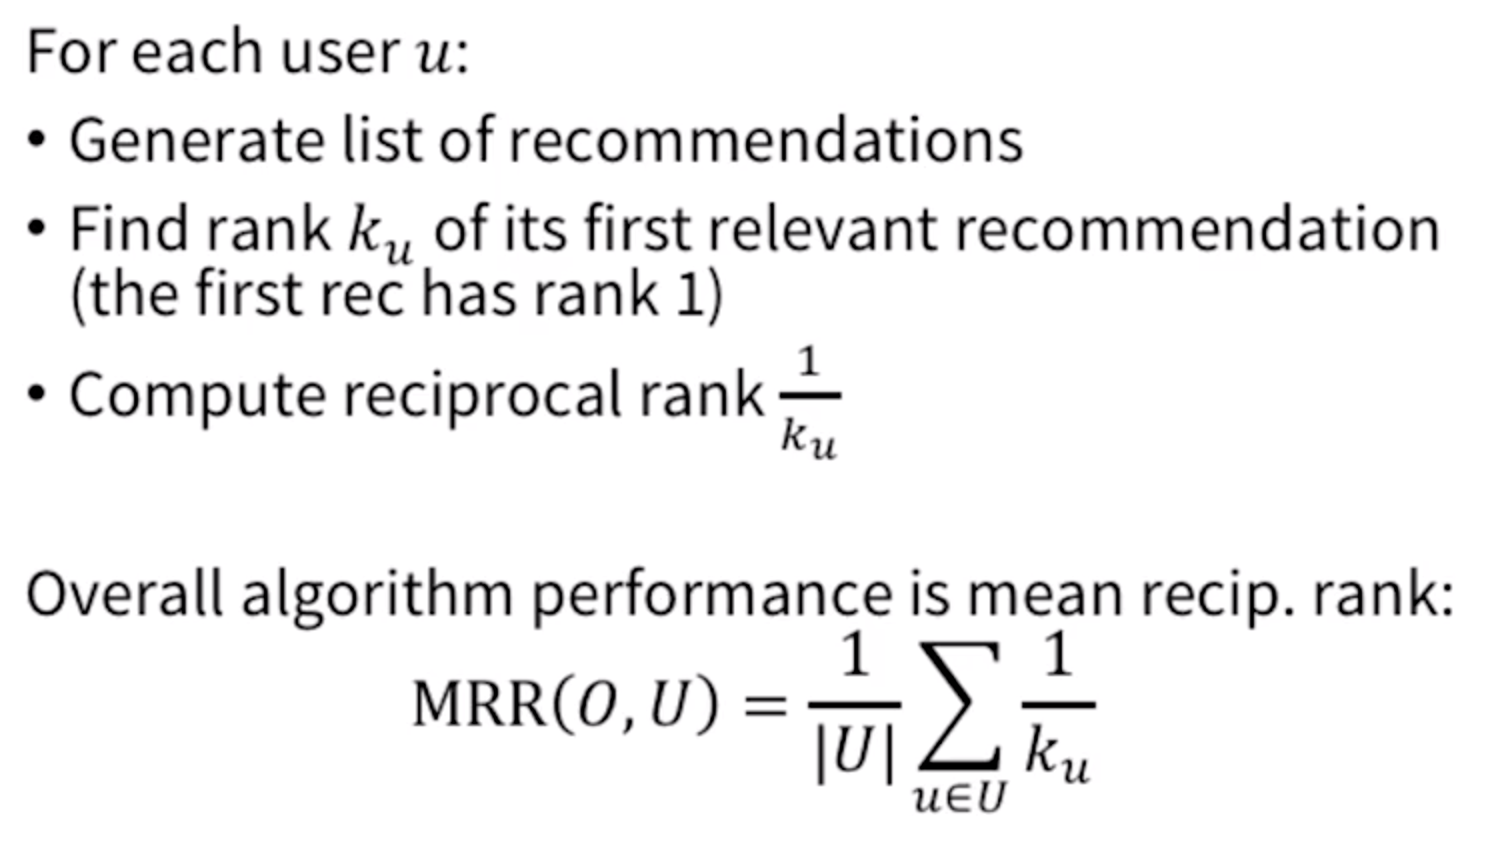 mrr_algorithm